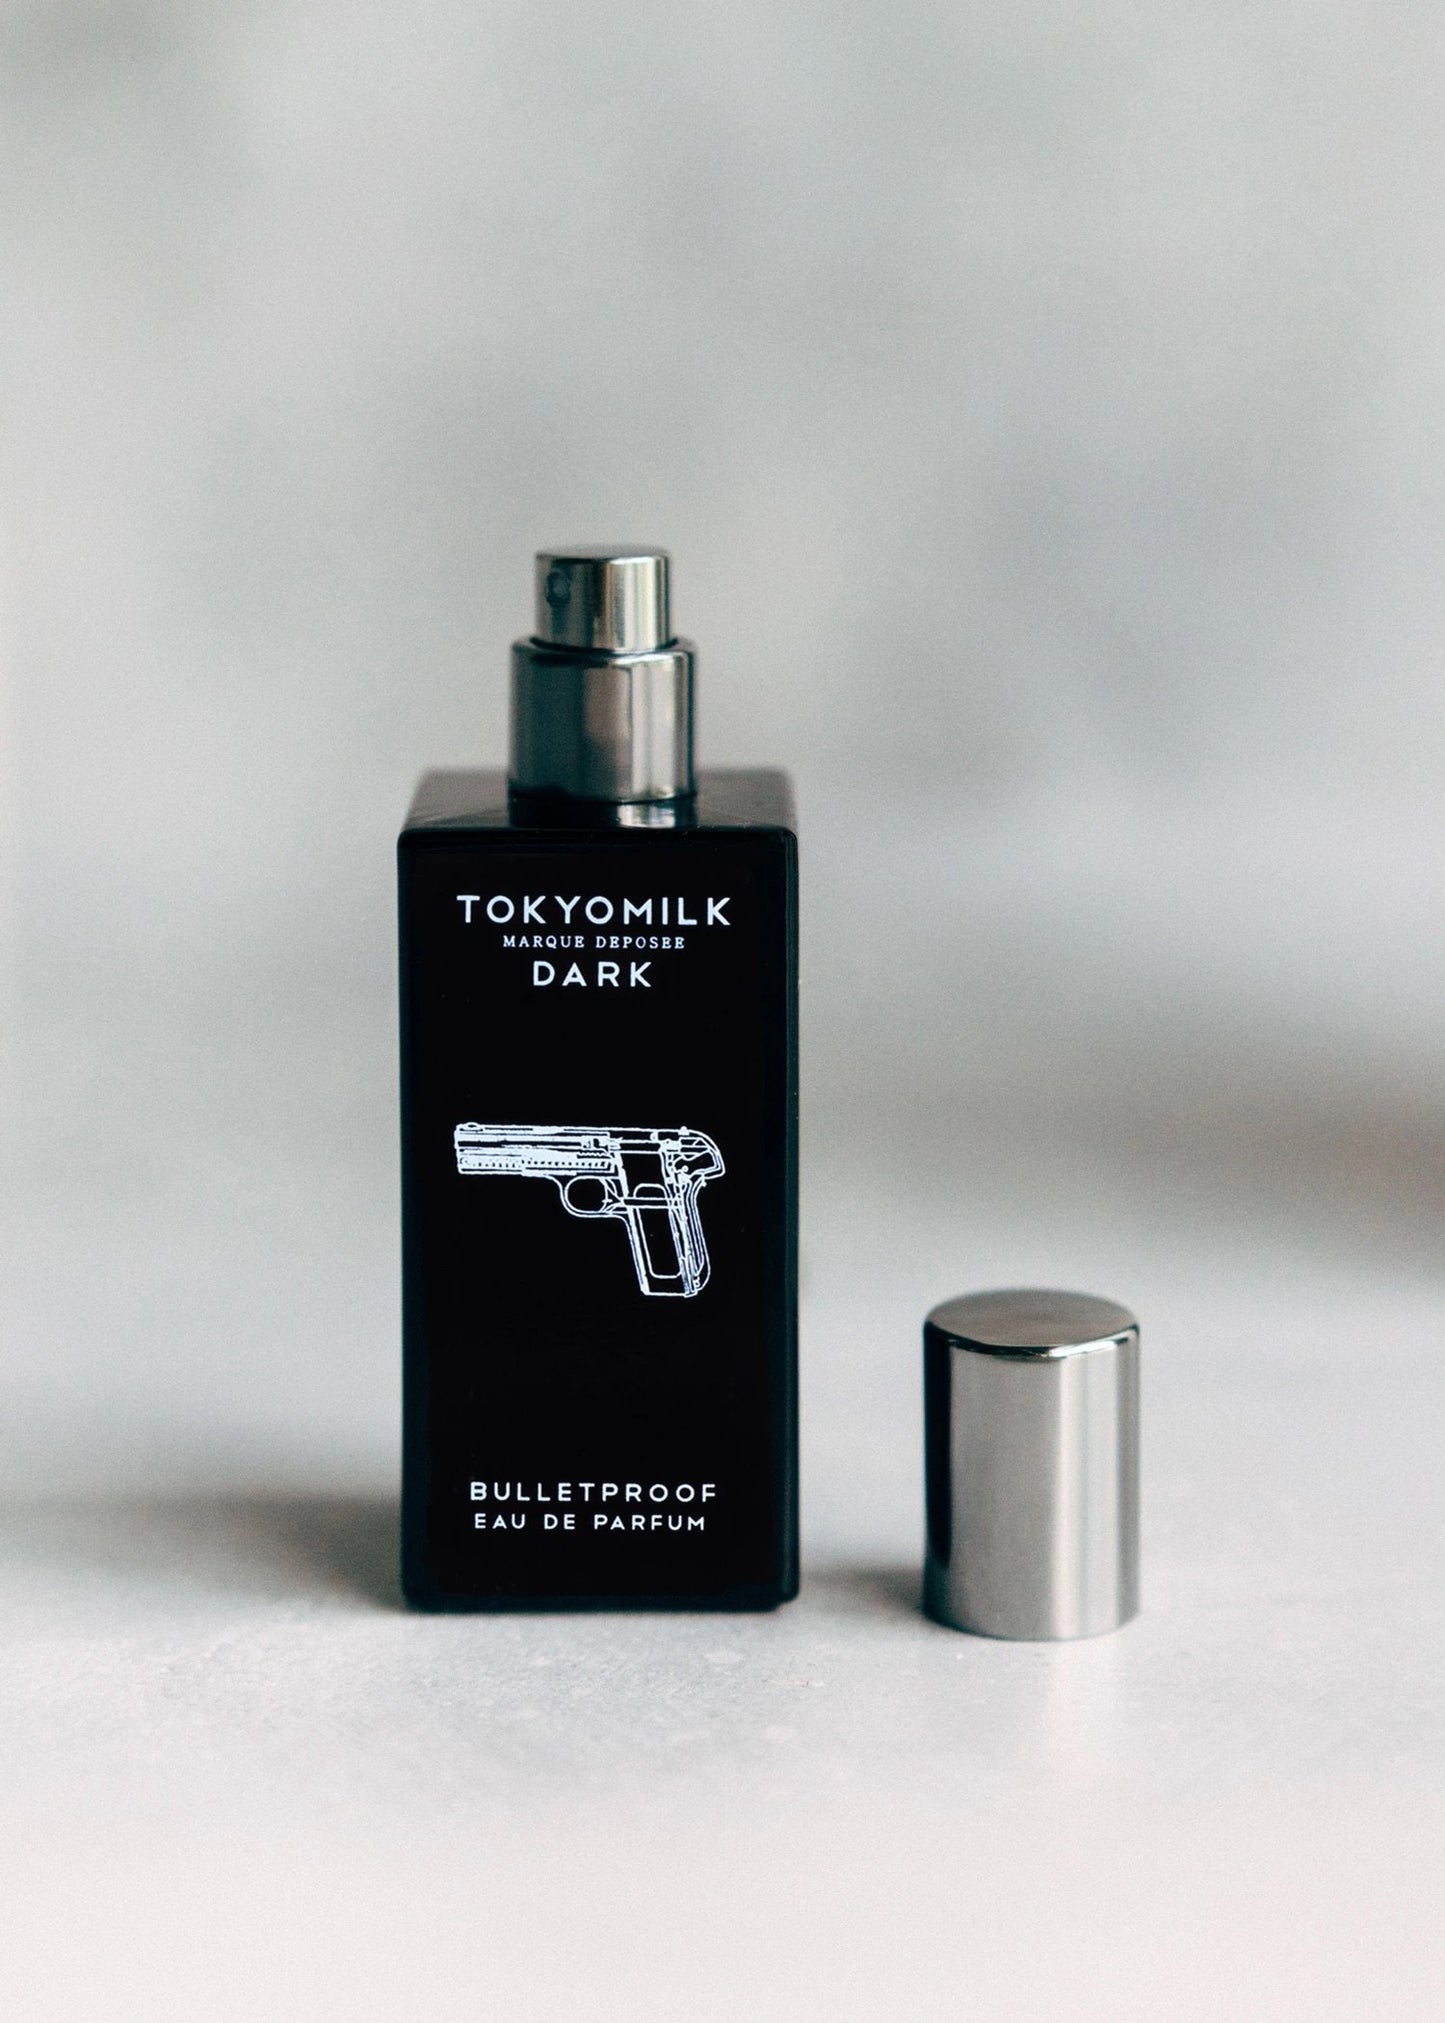 Bulletproof No. 45 Parfum